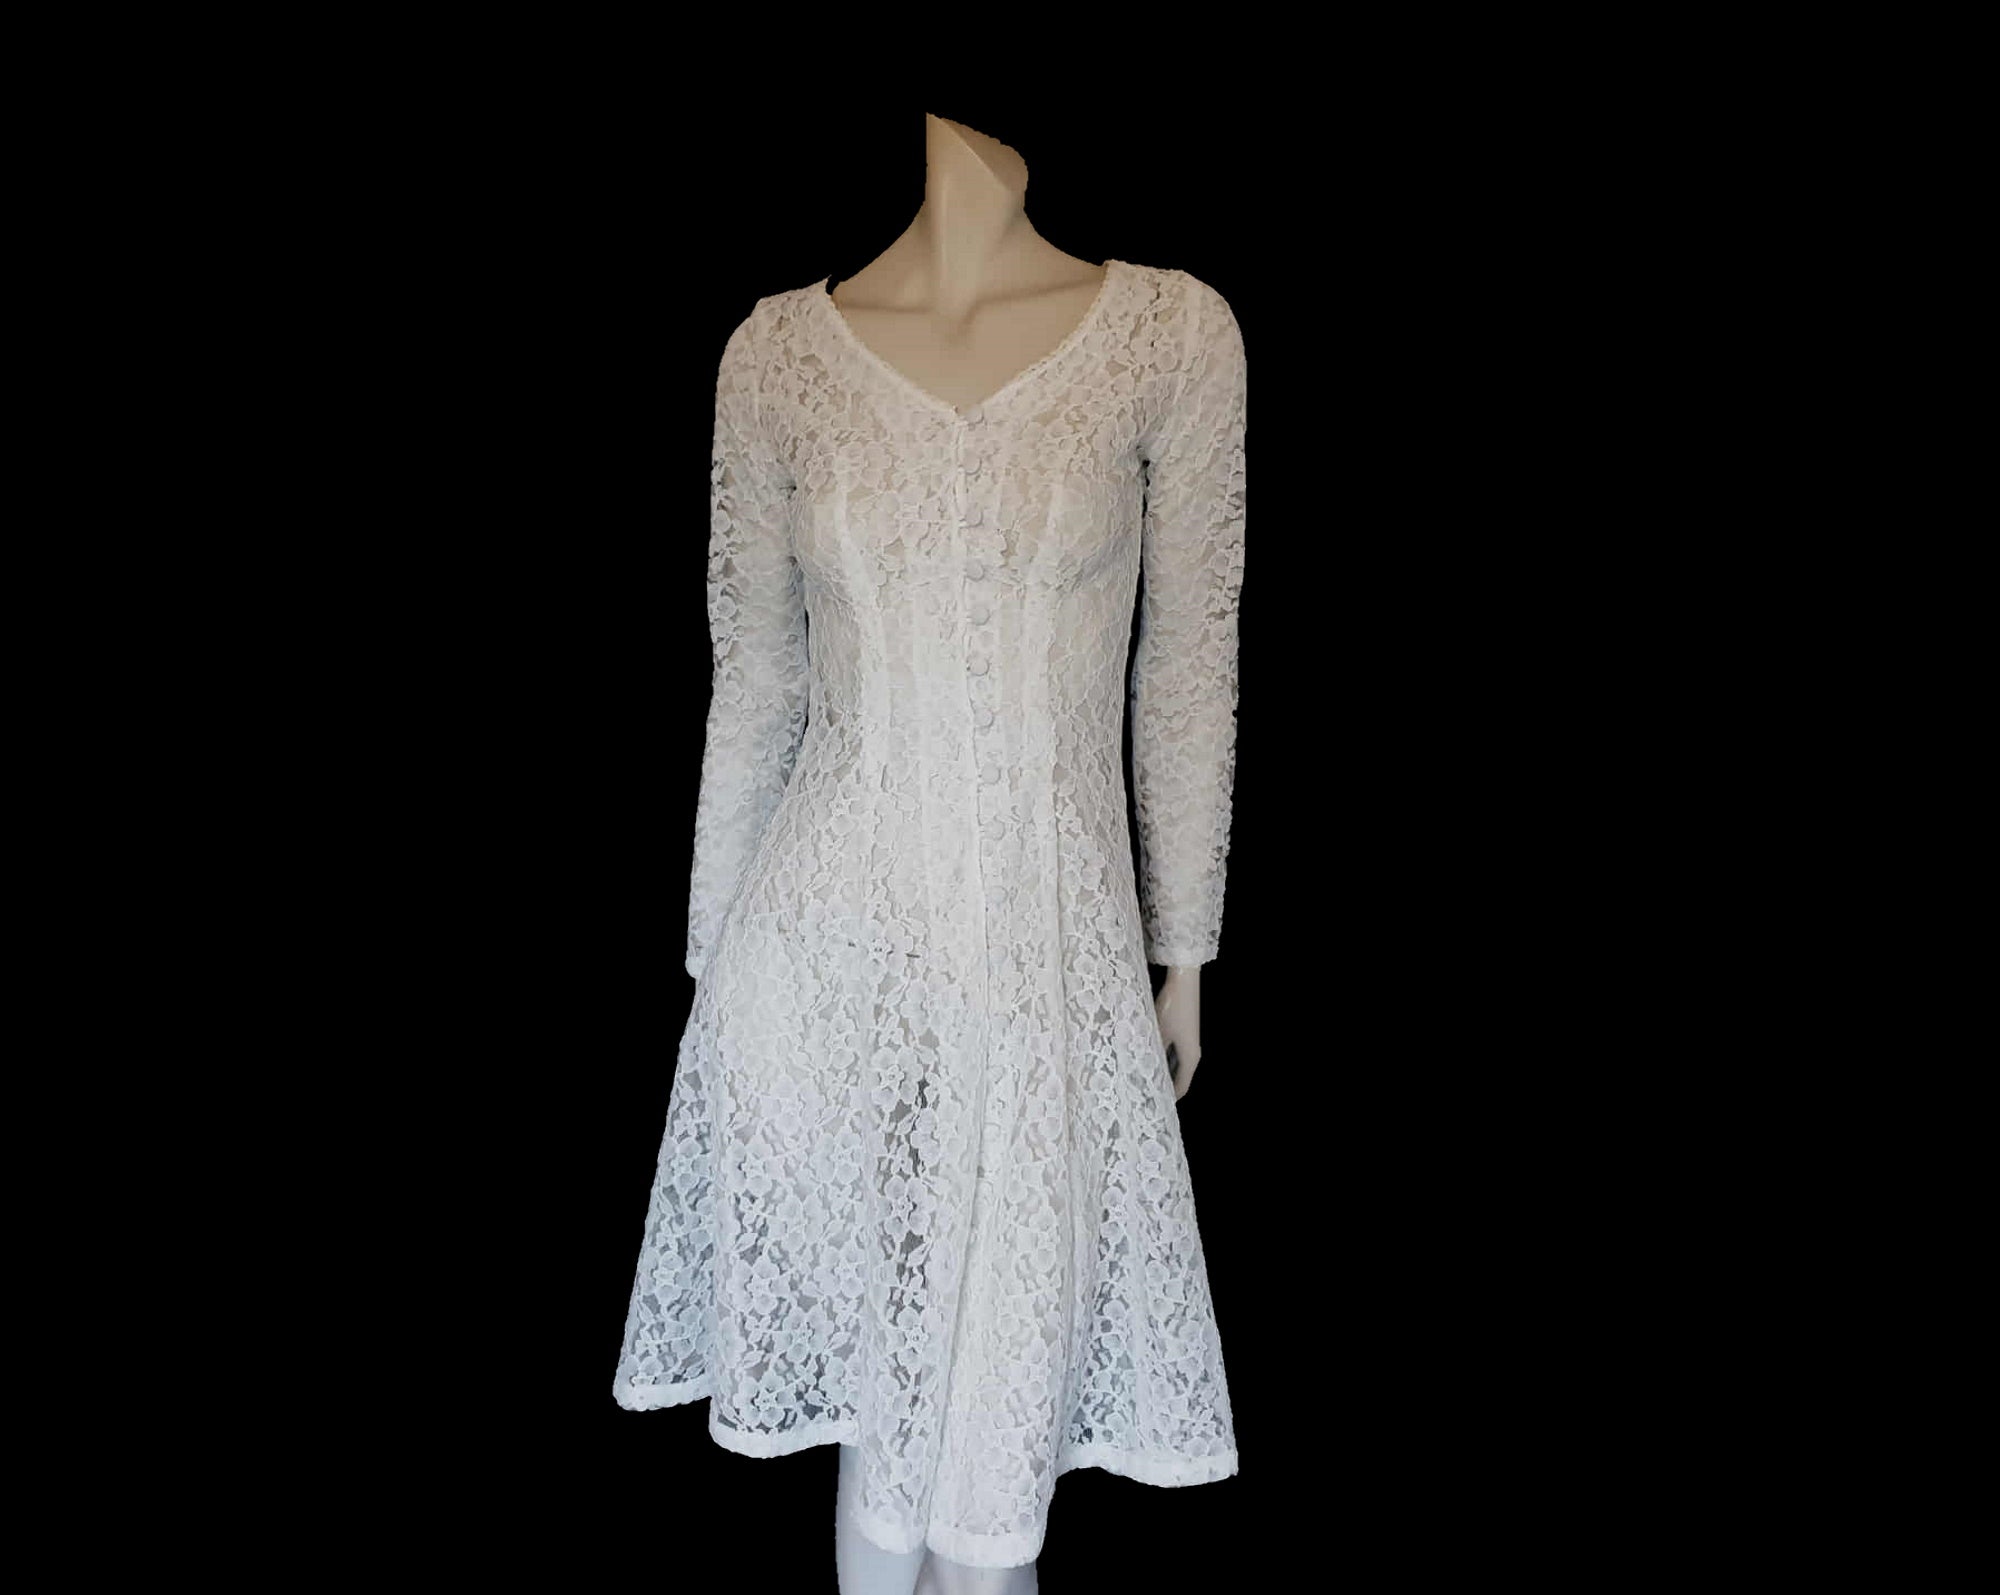 White Lace Dress by Senrera - S